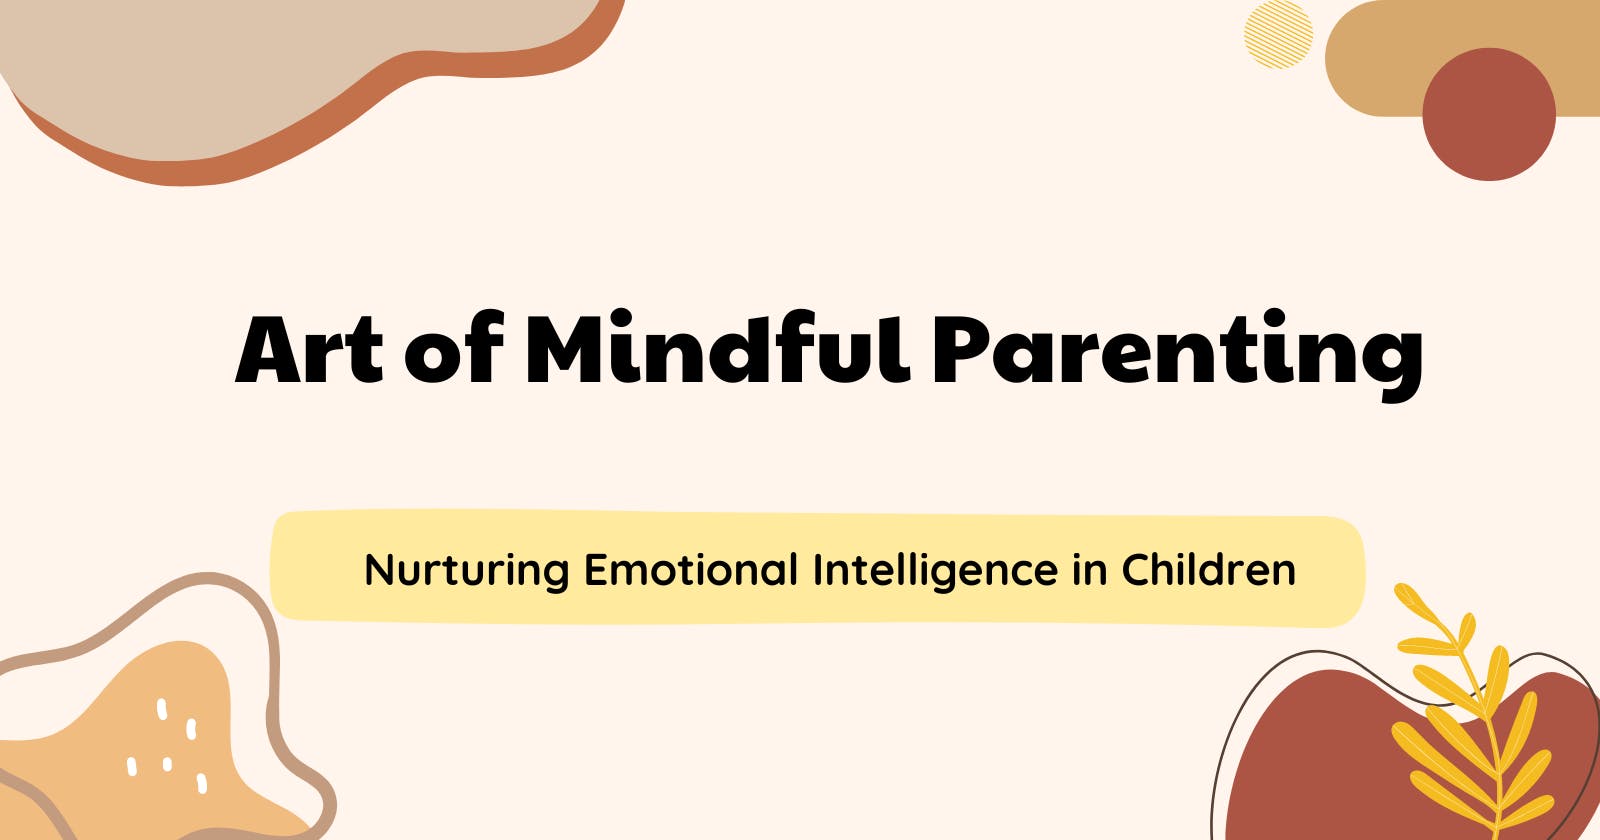 The Art of Mindful Parenting: Nurturing Emotional Intelligence in Children